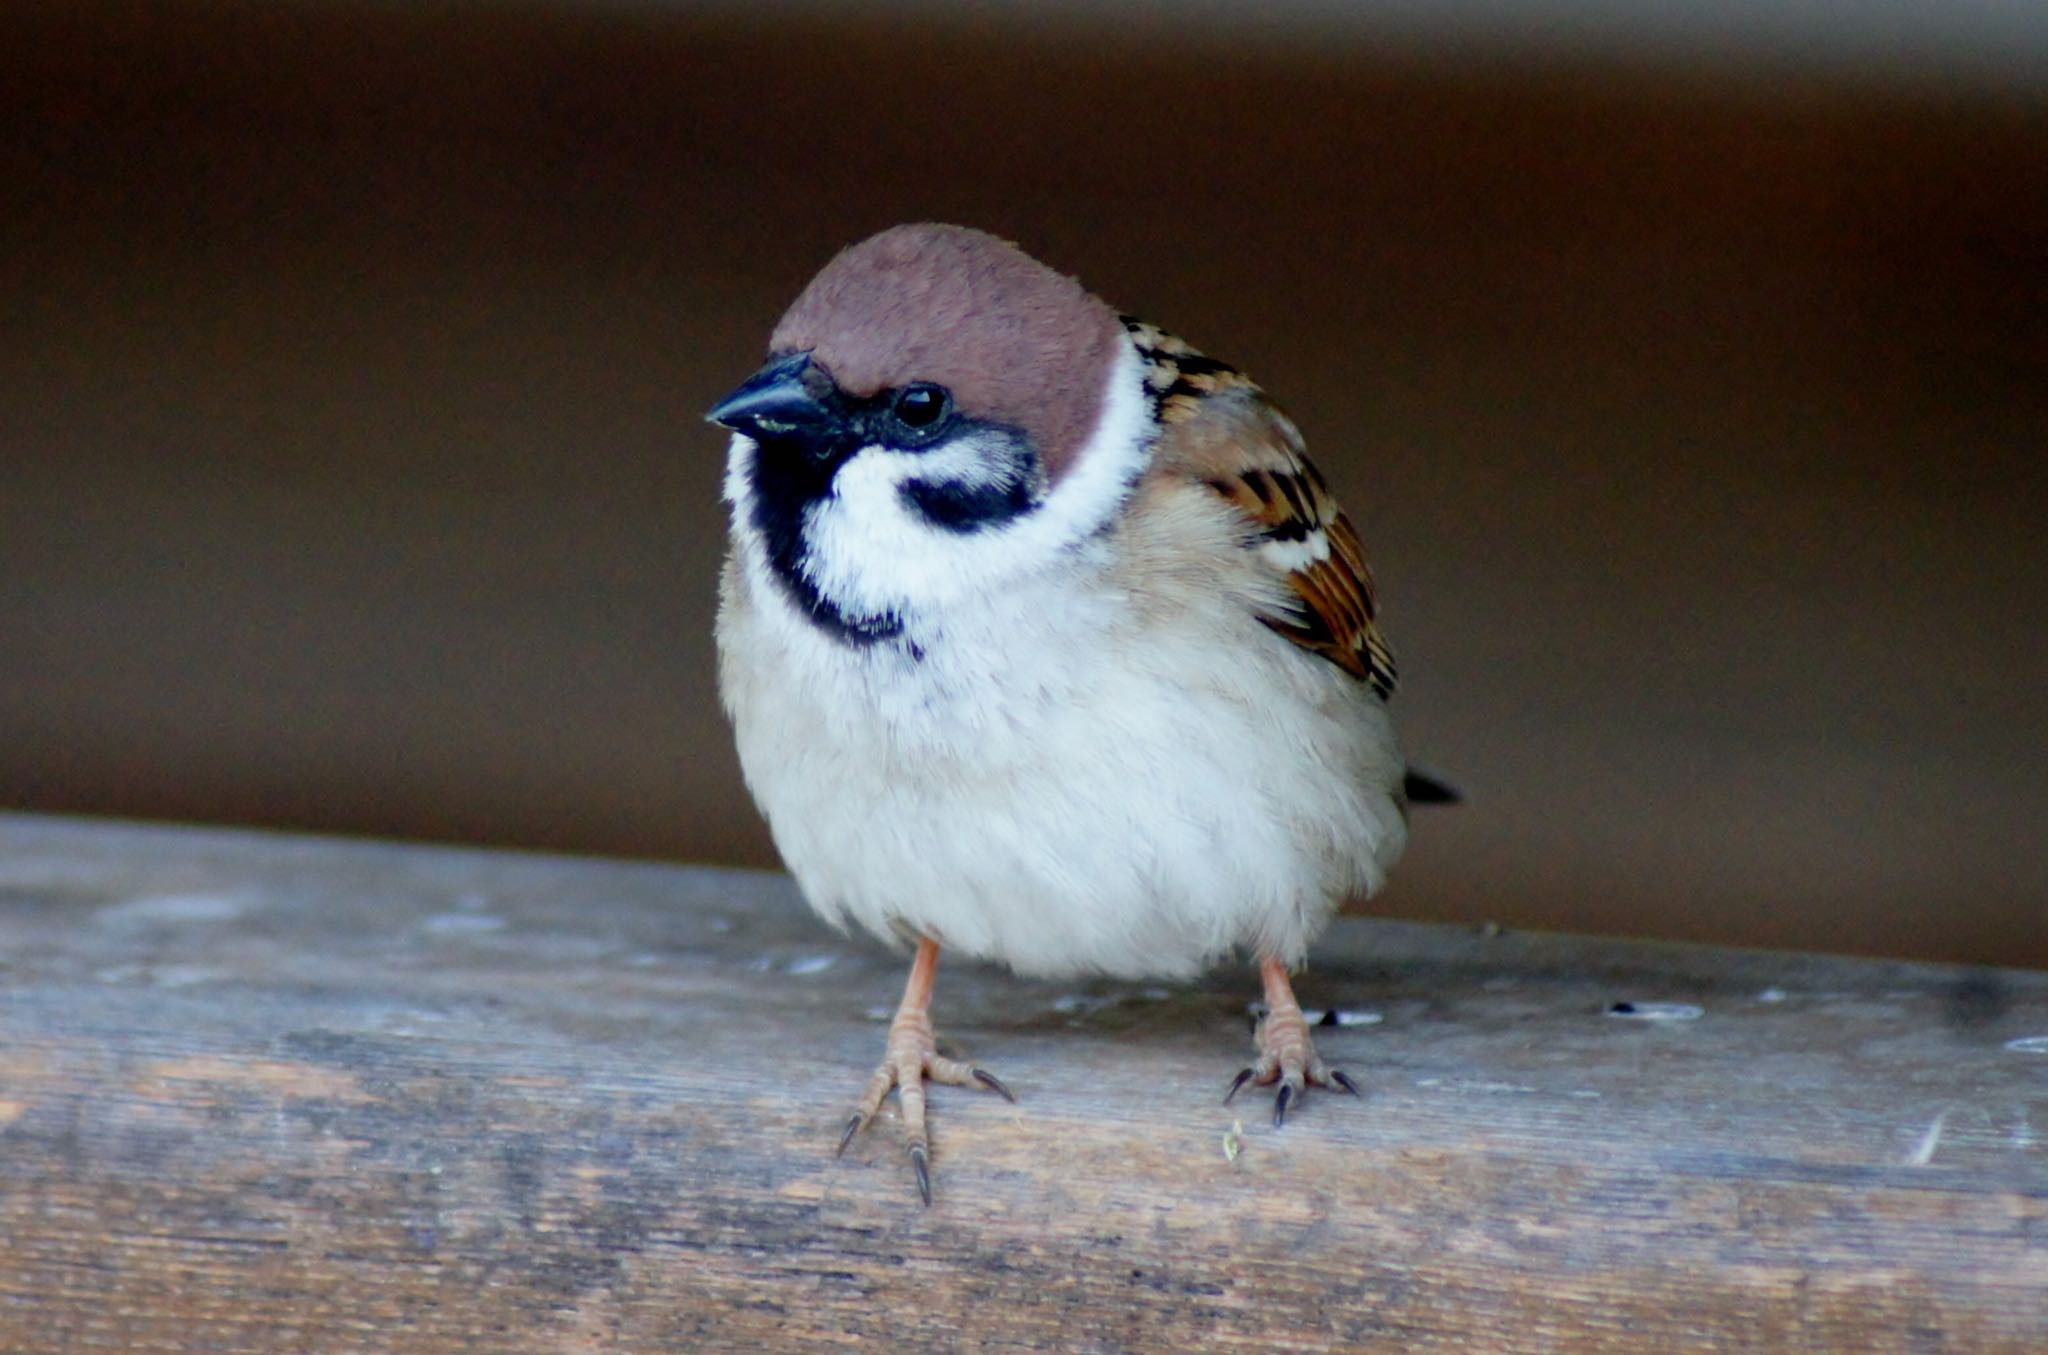 Photo of Eurasian Tree Sparrow at しあわせの村 by chama taro